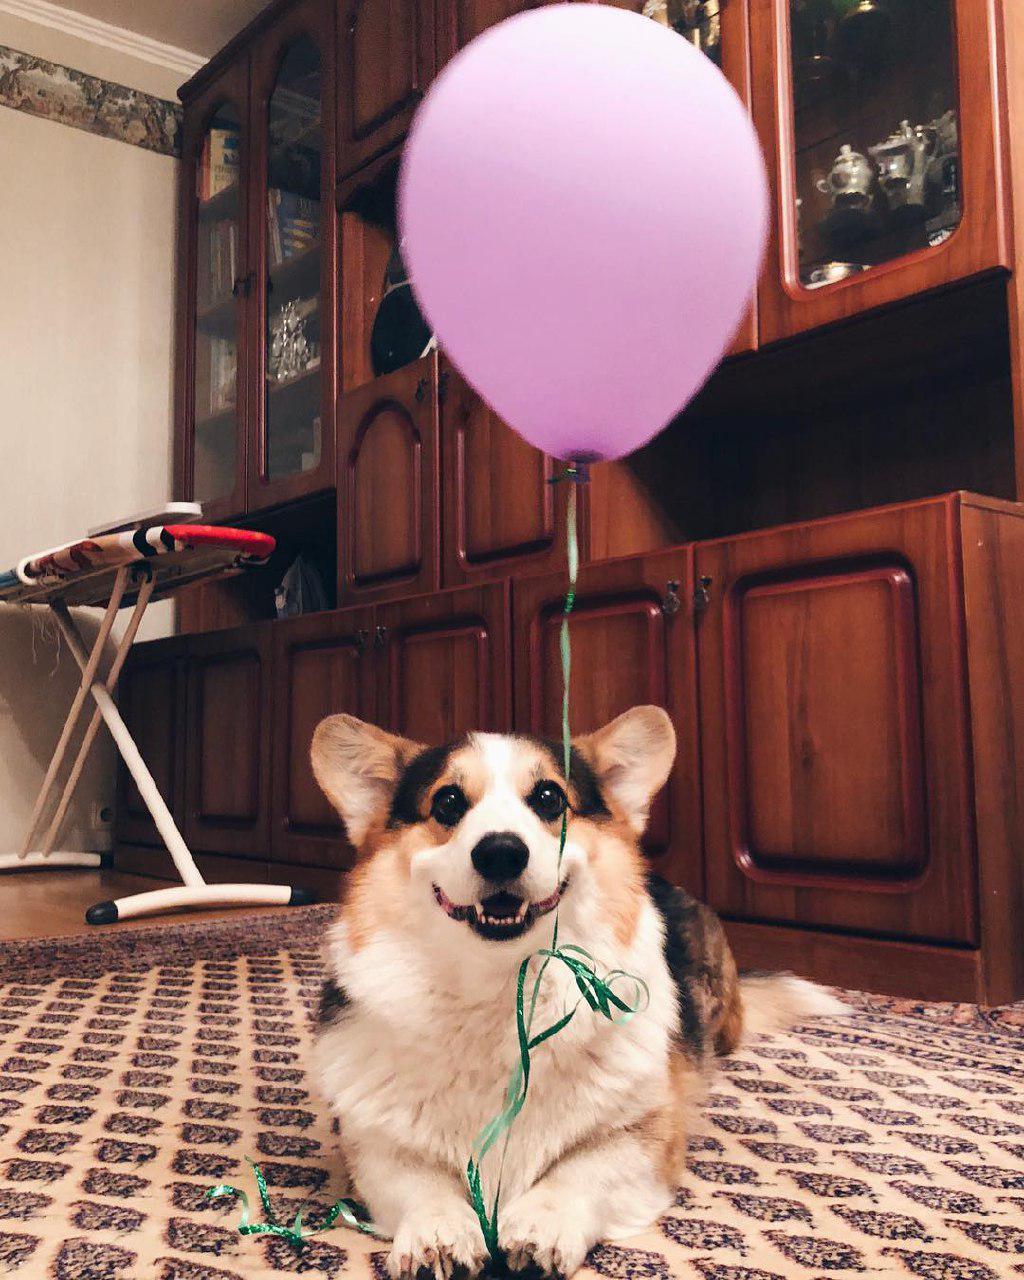 Corgi lying down on the floor with a balloon